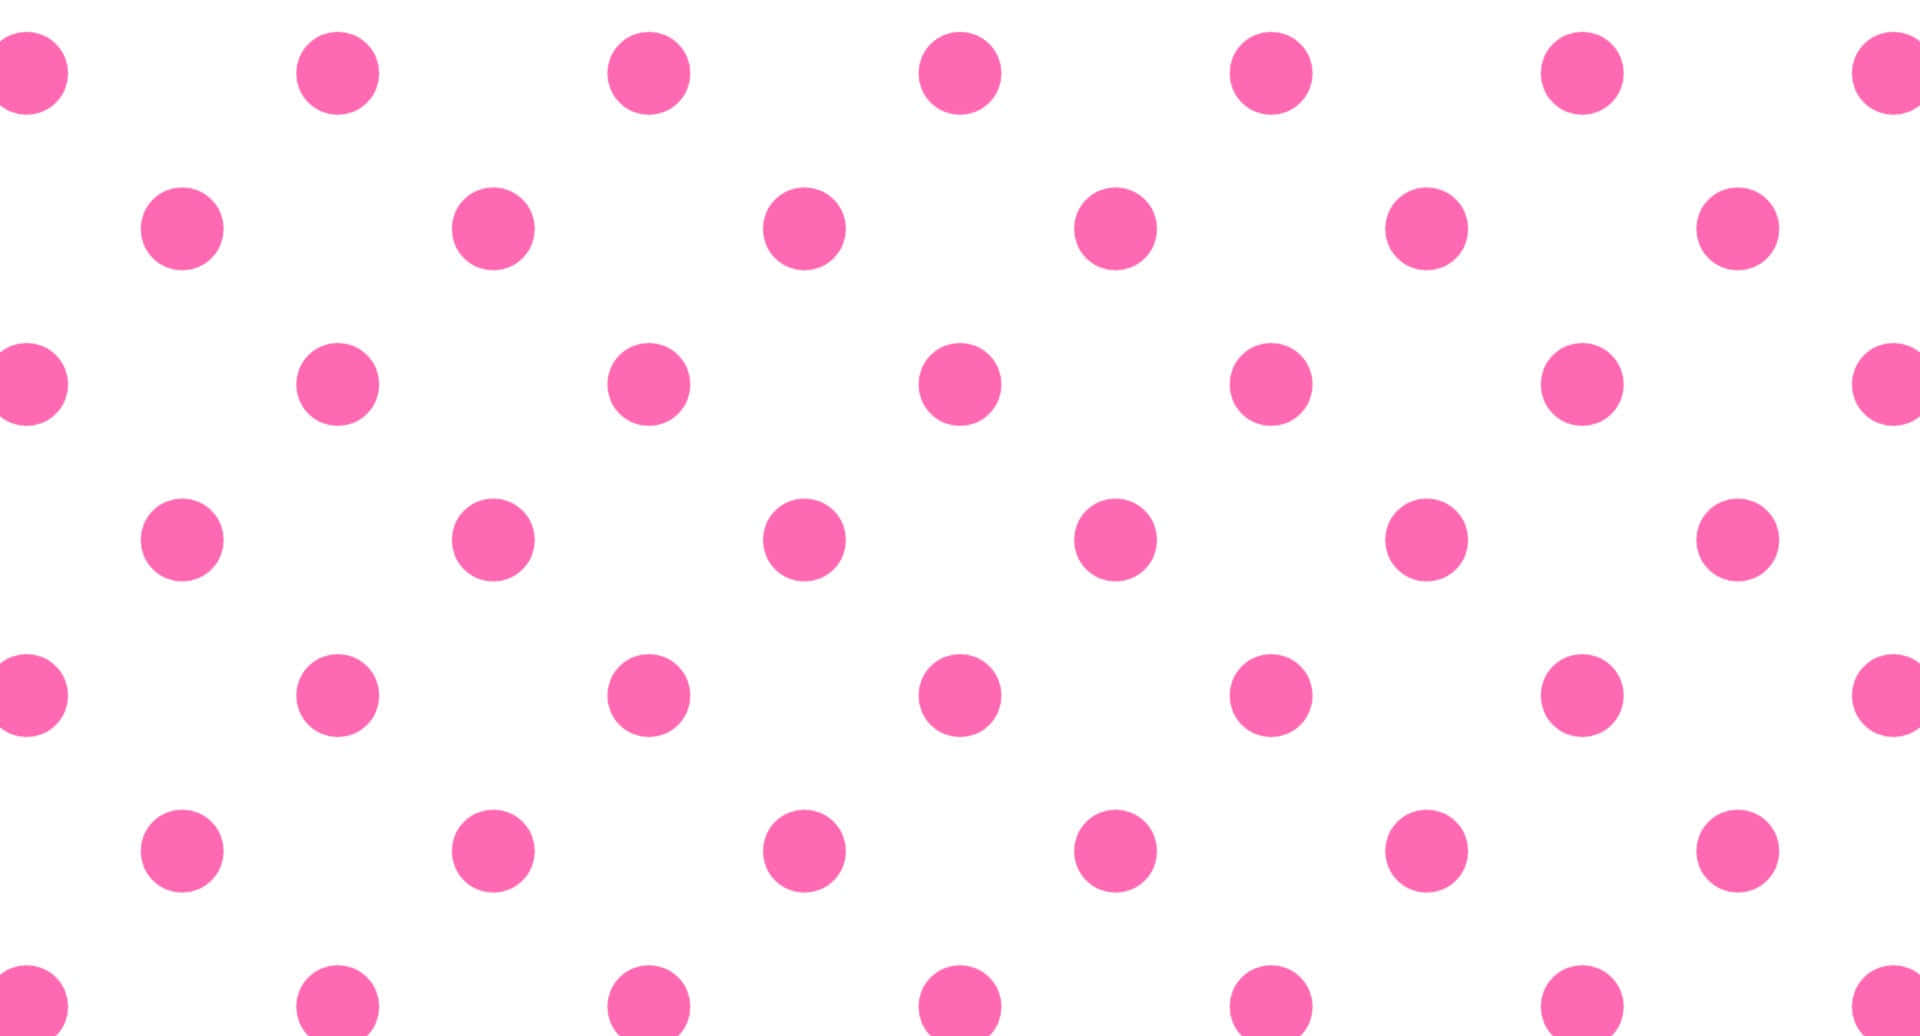 Fun Pink And White Polka Dots Desktop Wallpaper